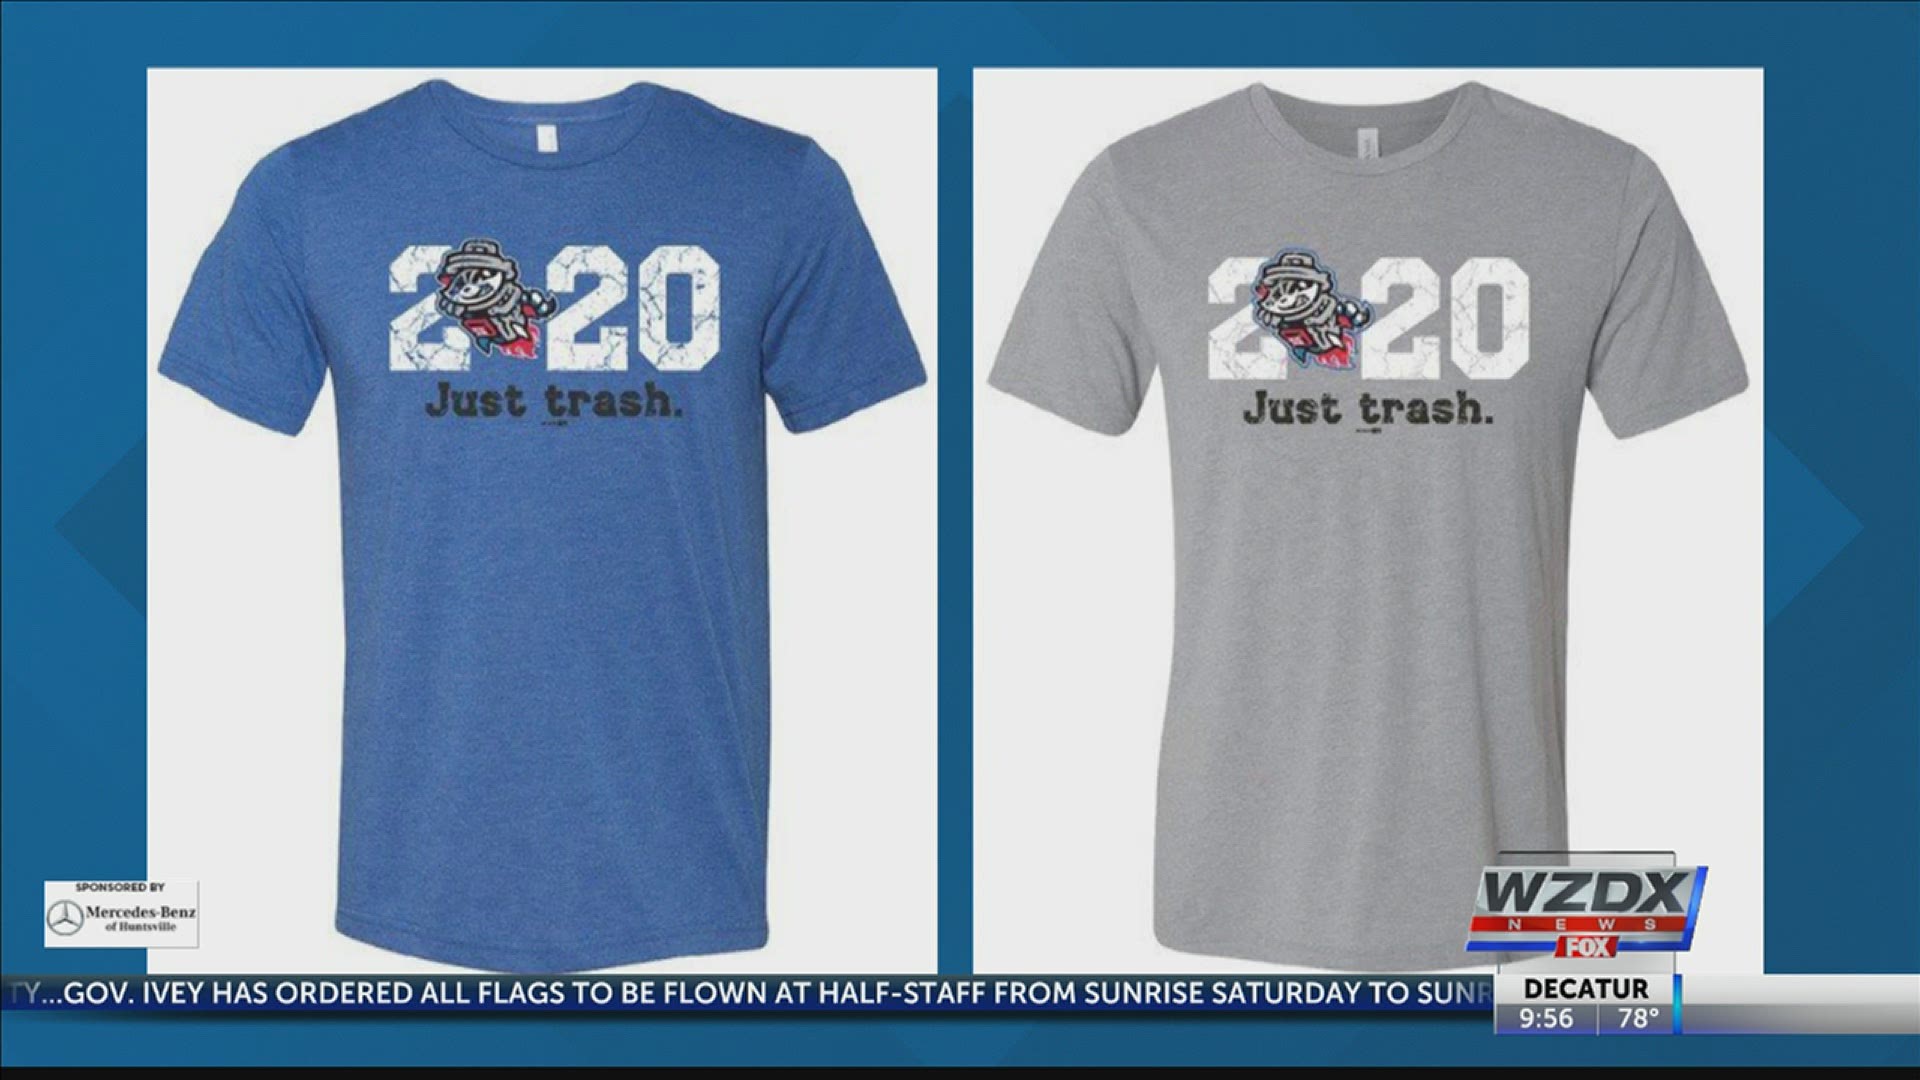 Trash Pandas shirt perfectly describes 2020